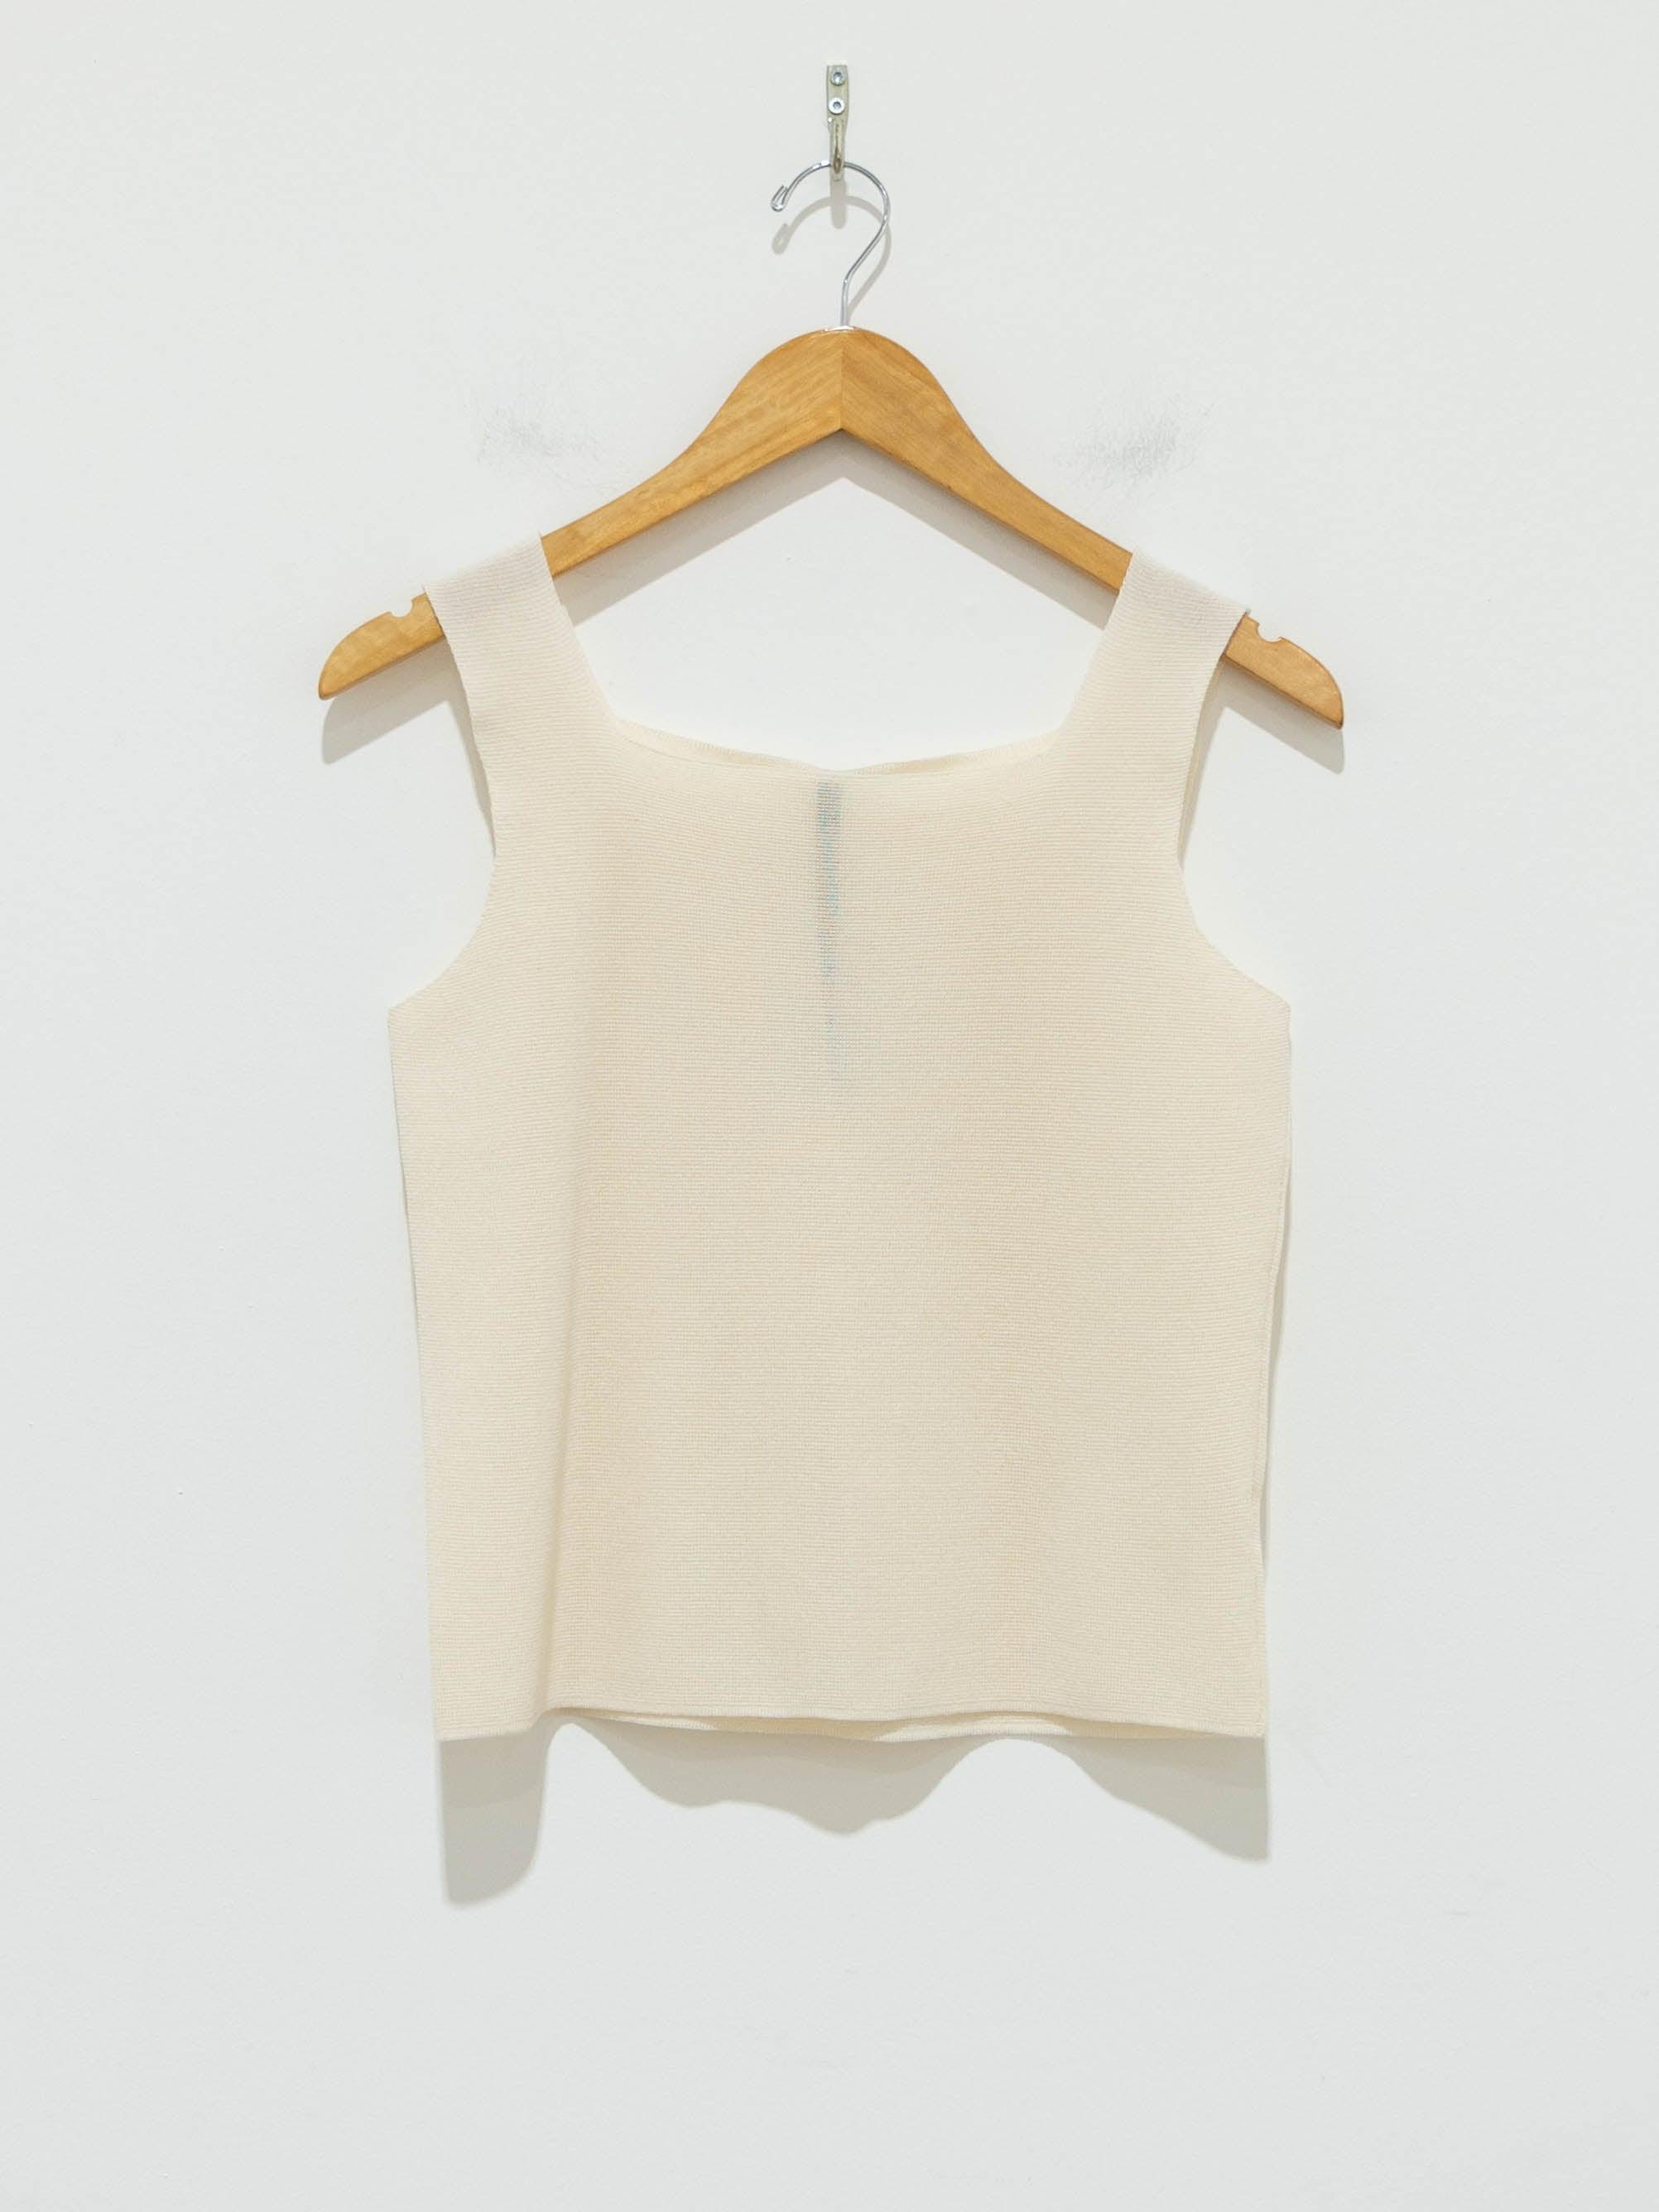 Namu Shop - Sara Lanzi Squared Tank Top - Cream Light Cotton Knit